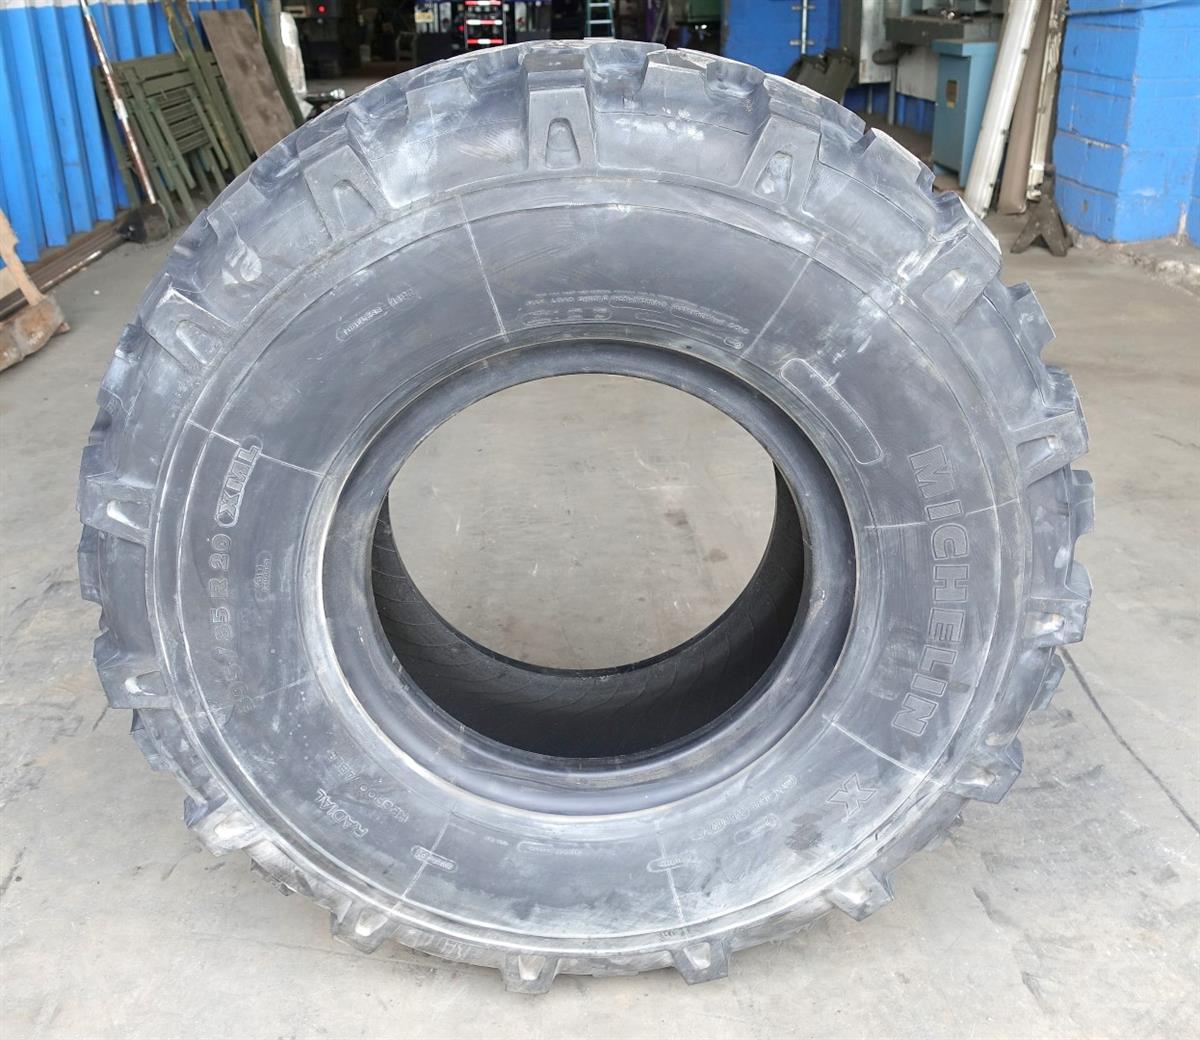 TI-320 | TI-320 Michelin X XML 39585R20 Tire NOS (1) (Large).JPG